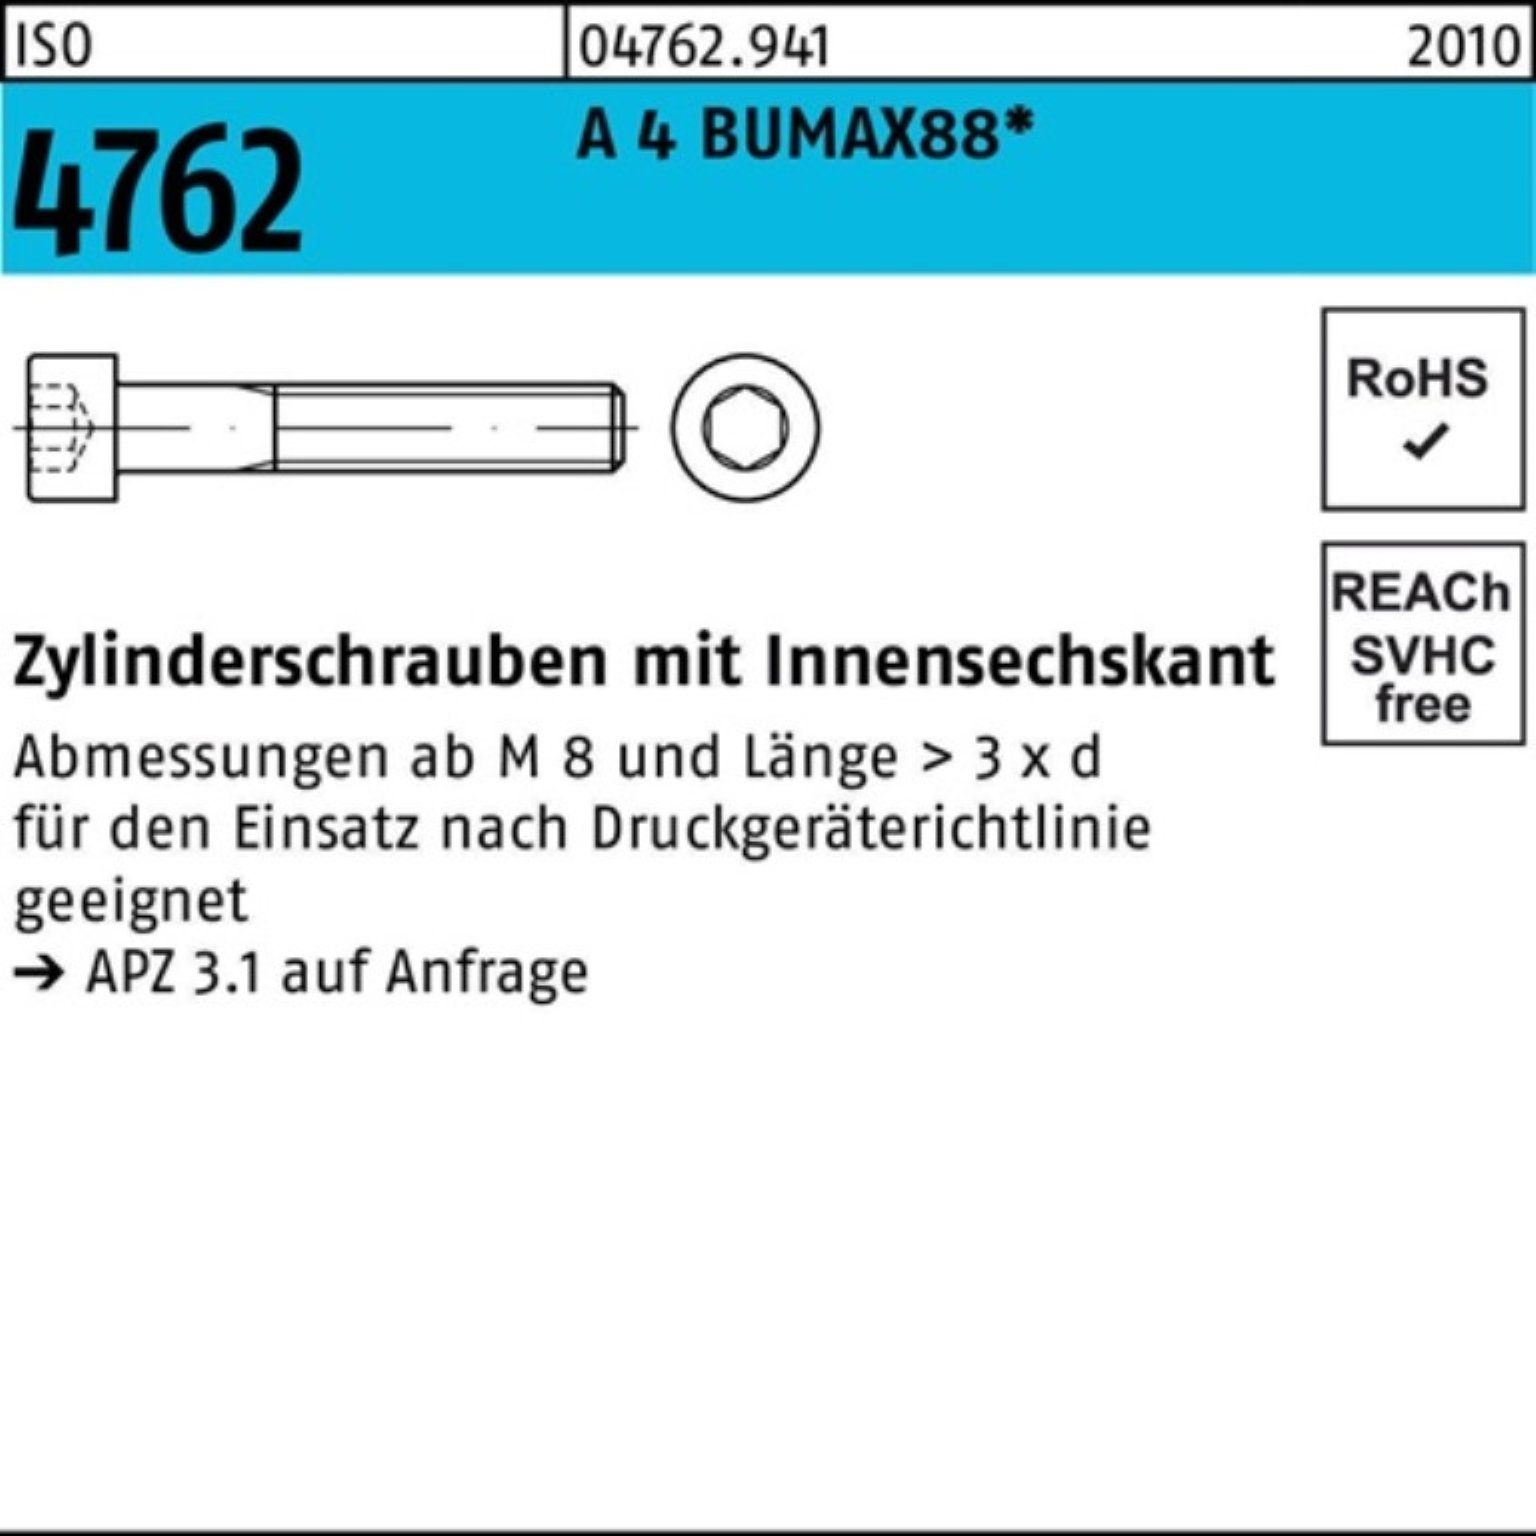 30 100er M10x 4762 50 A 4 Zylinderschraube Pack Bufab Zylinderschraube Innen-6kt BUMAX88 ISO